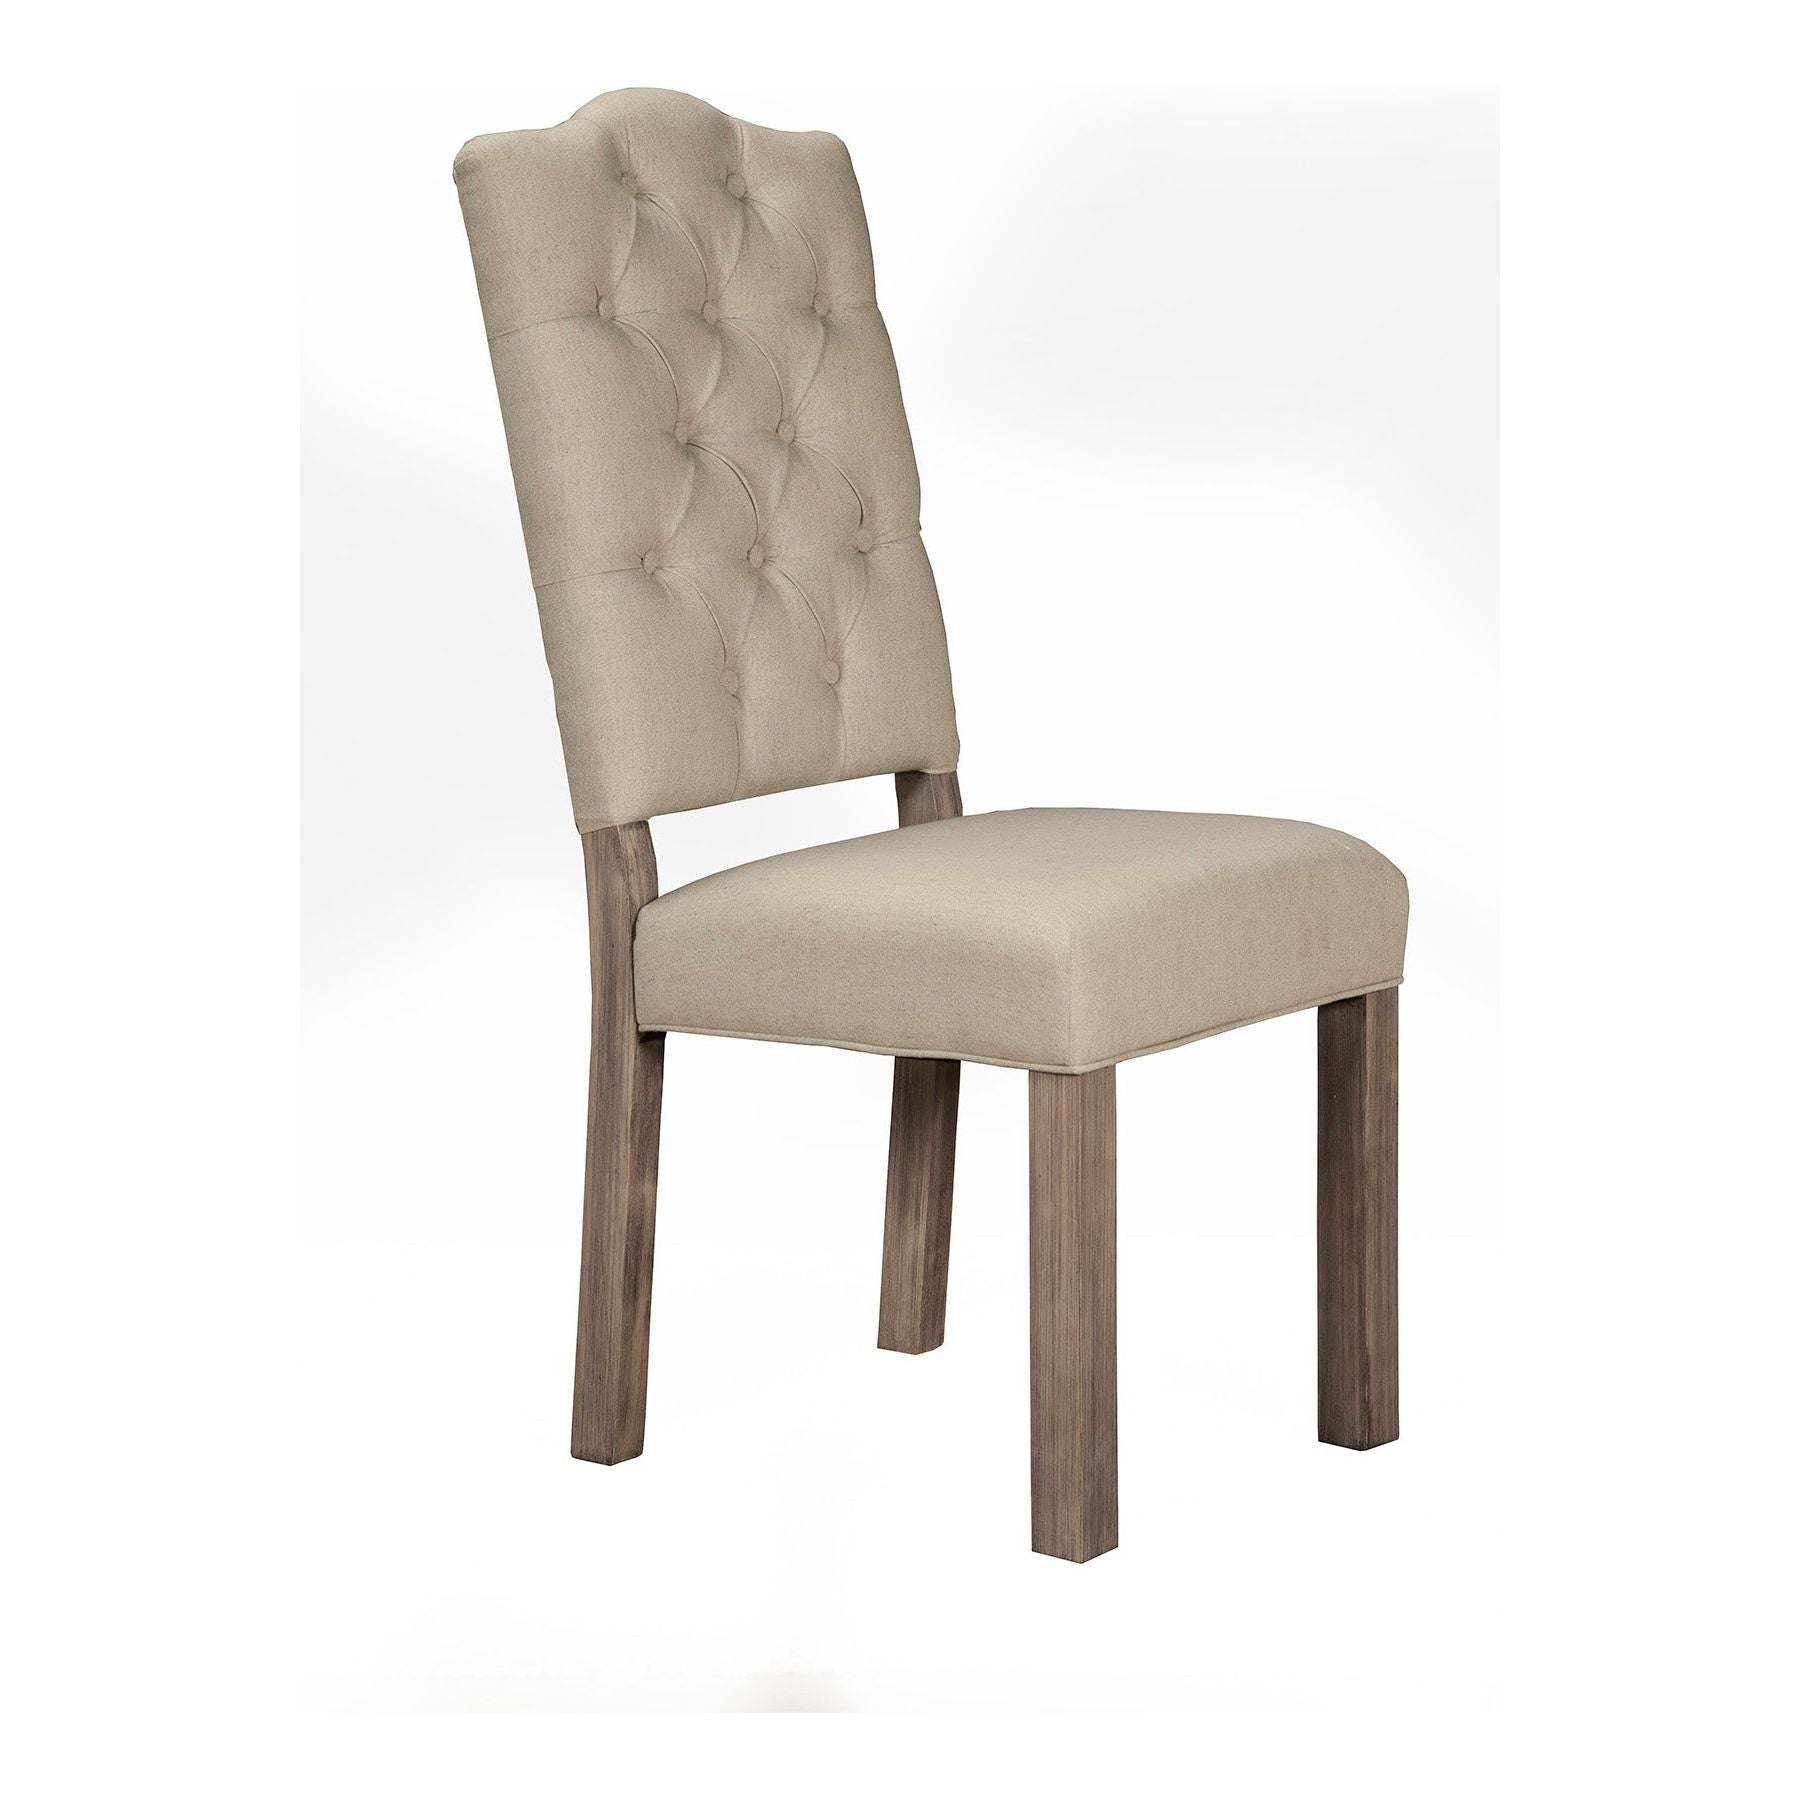 Fiji Side Chairs, Weathered Grey - Alpine Furniture